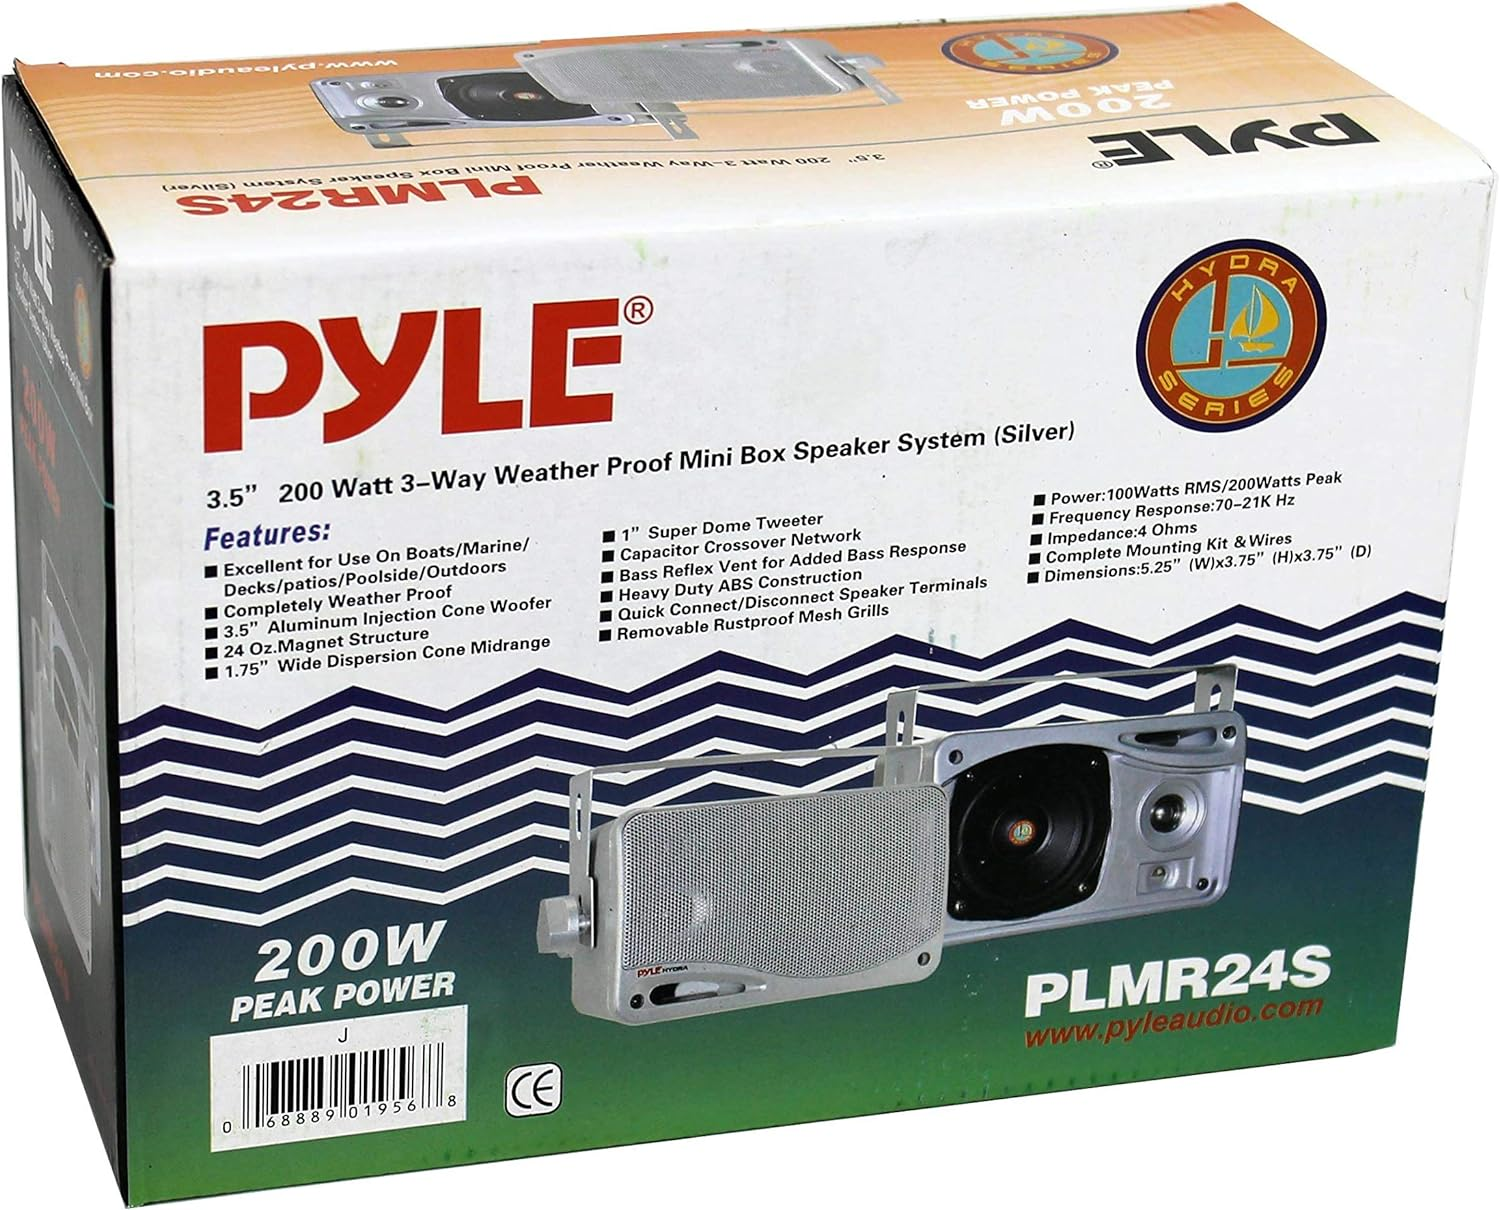 Pyle 3-Way Waterproof Marine Box Speakers - 3.5" 200 Watt Dual Indoor Outdoor Speaker System - Weatherproof/Waterproof Outdoor Speaker - Home, Boat, Pool, Patio Indoor Outdoor Use PLMR24S (Silver)